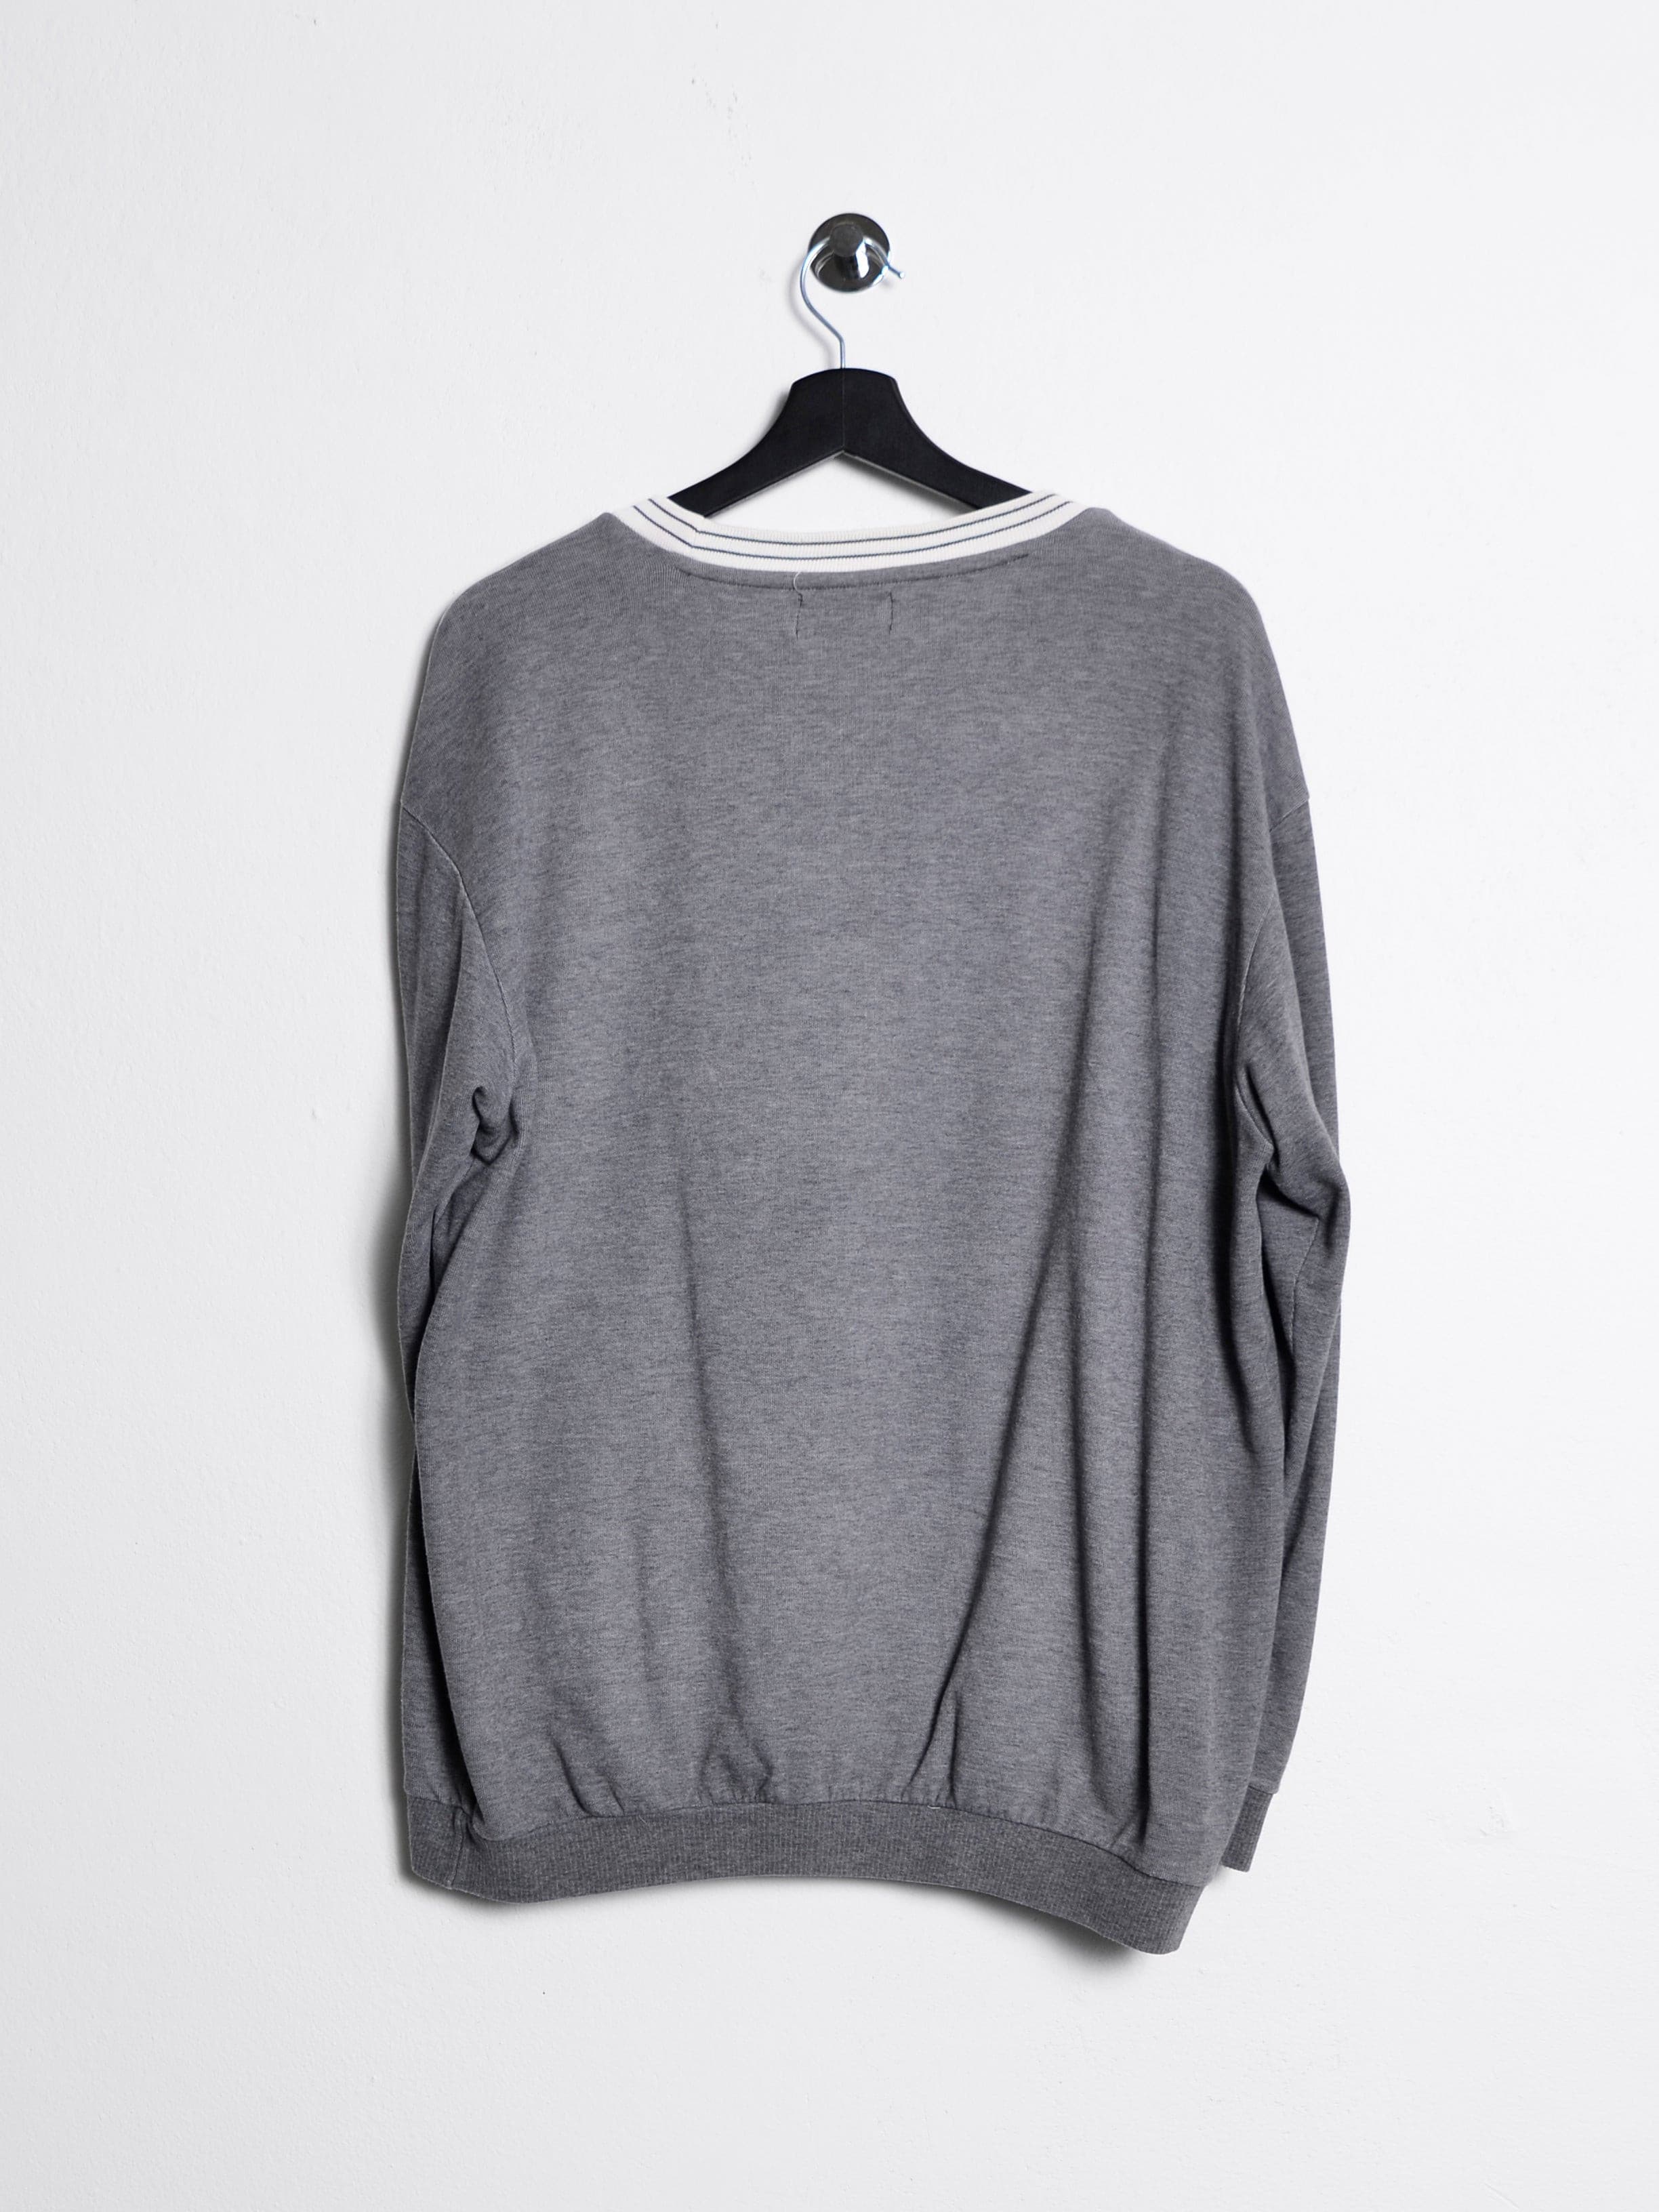 Fila Intimo Swearshirt Grey // Large - RHAGHOUSE VINTAGE